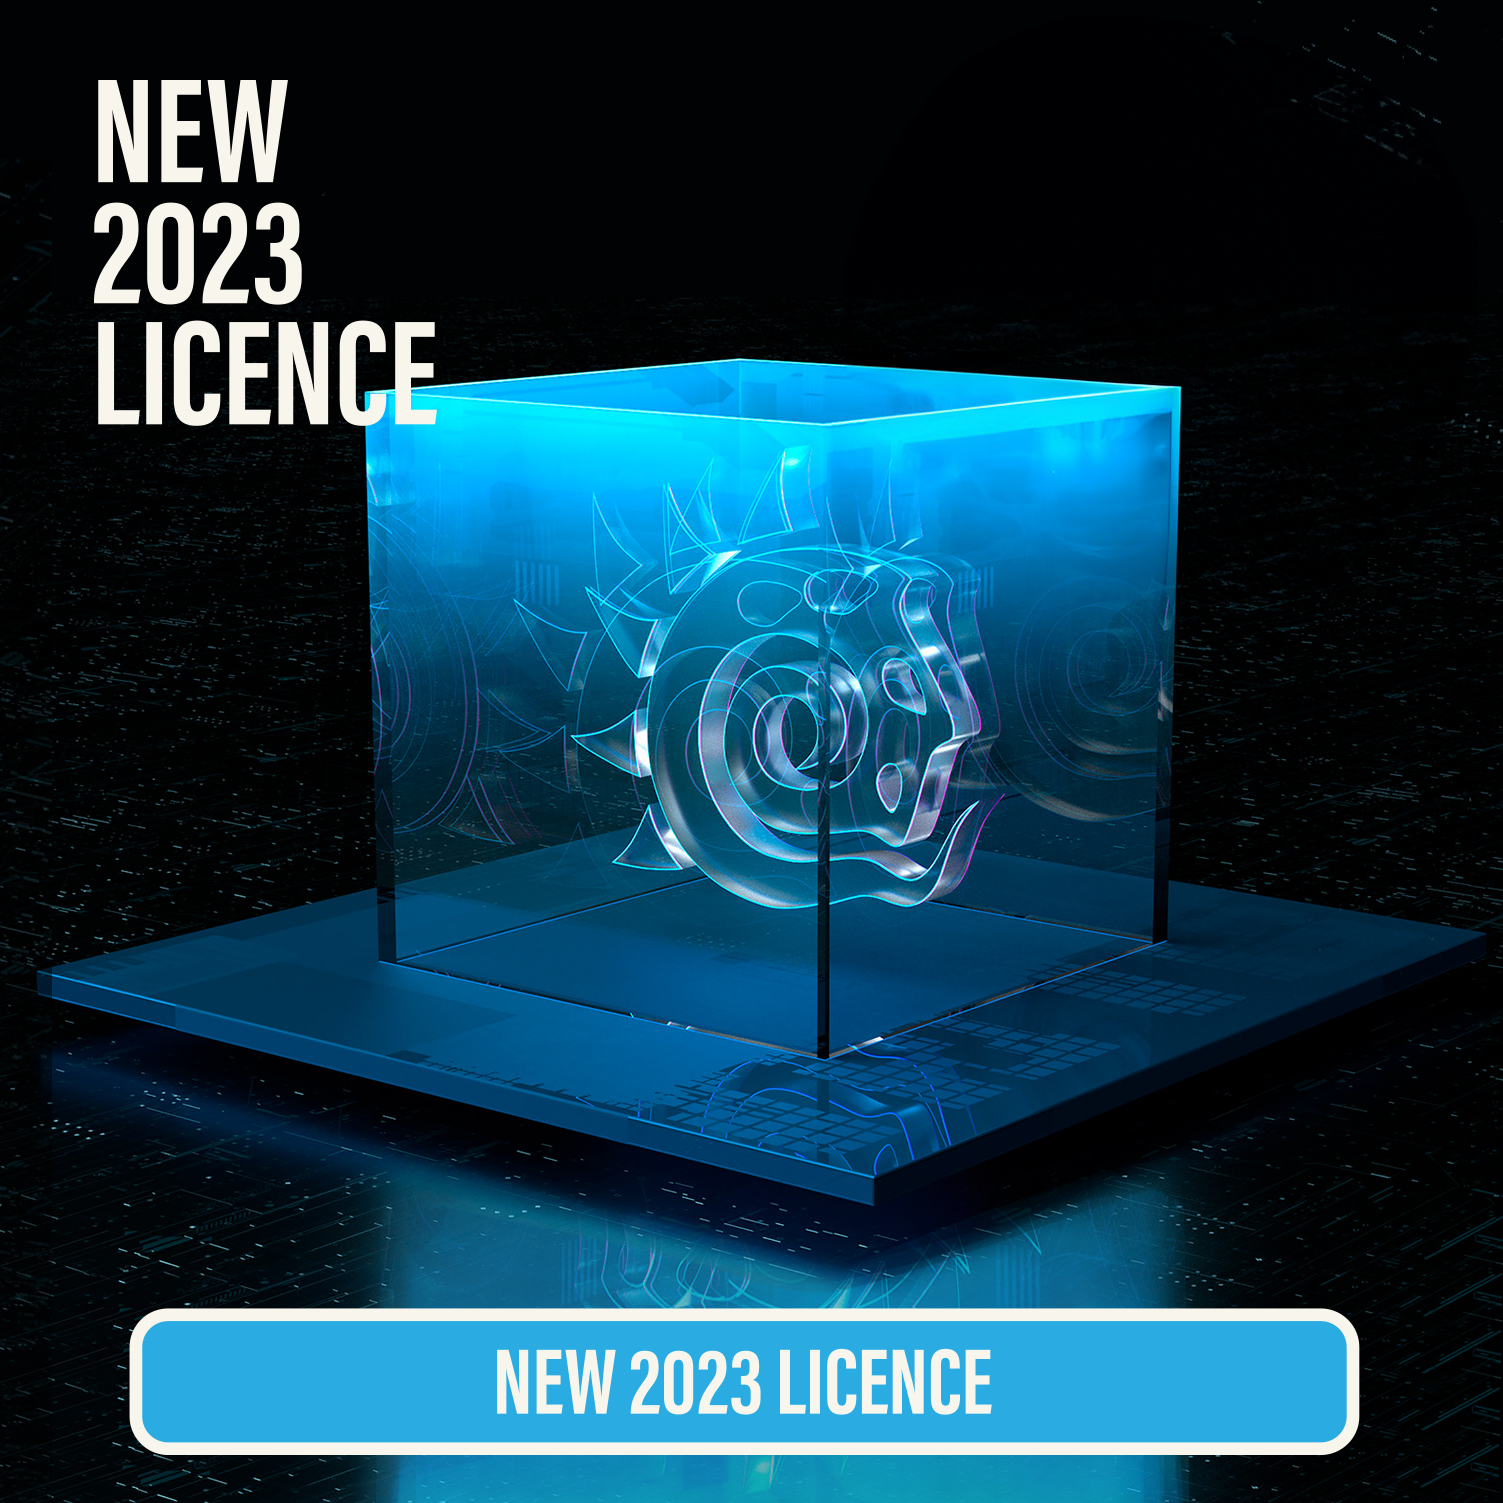 NEW_2023_LICENSE_No_stamp